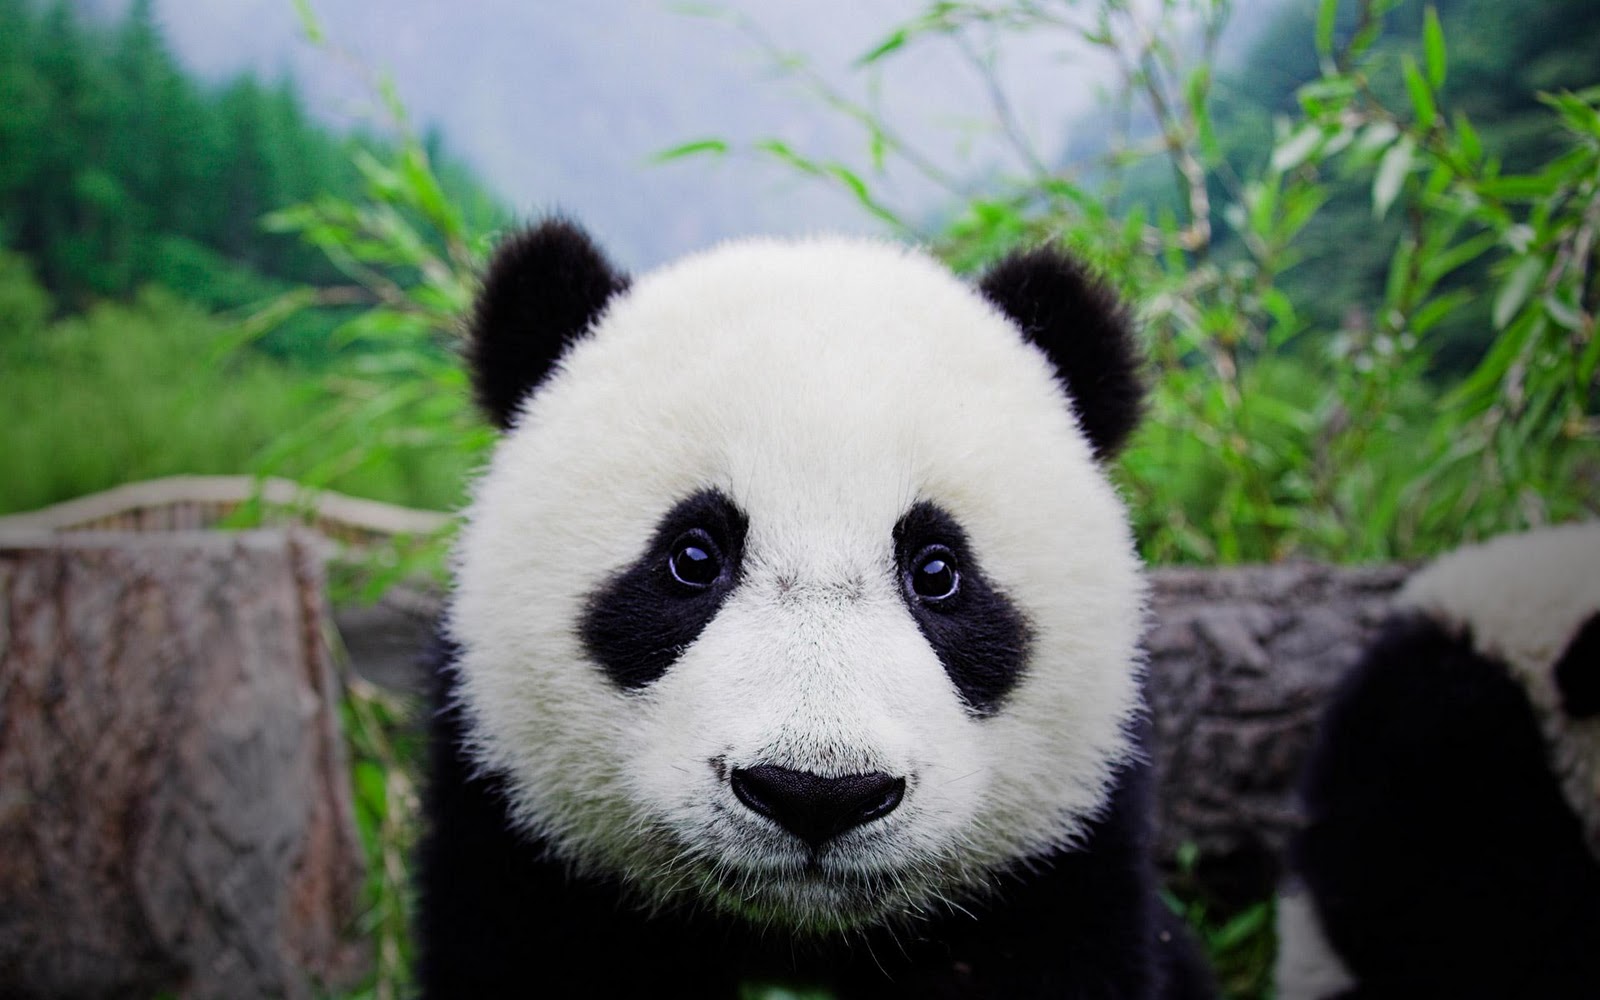 Panda Face wallpaper - Apps on Google Play